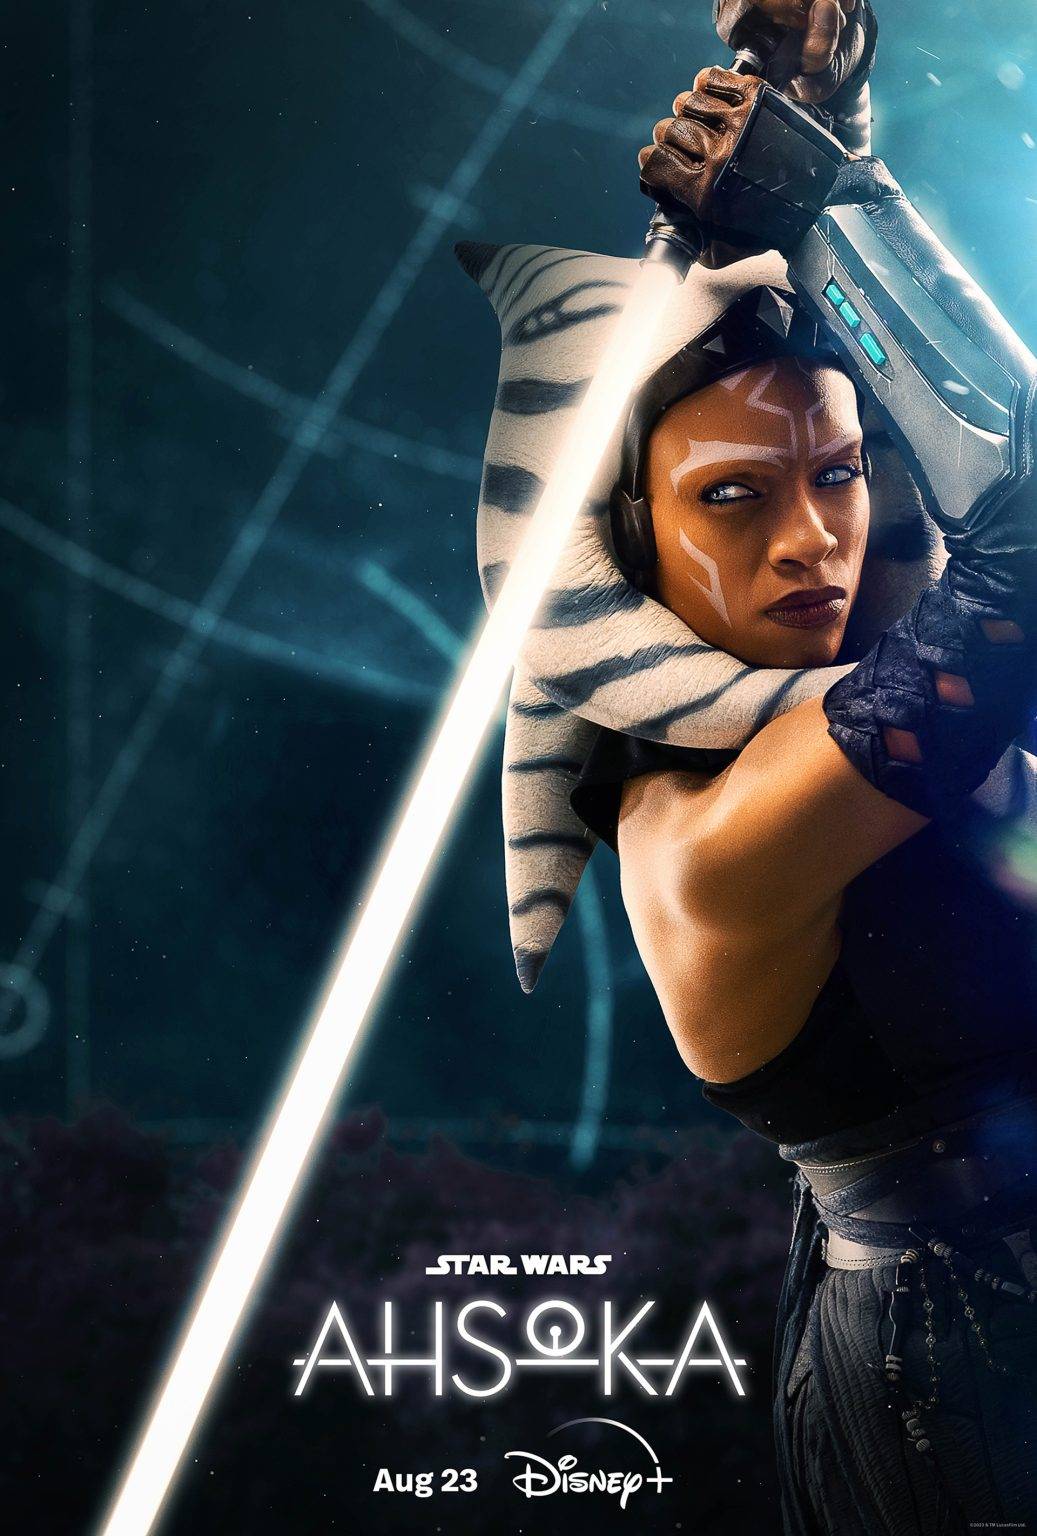 Star Wars Ahsoka poster